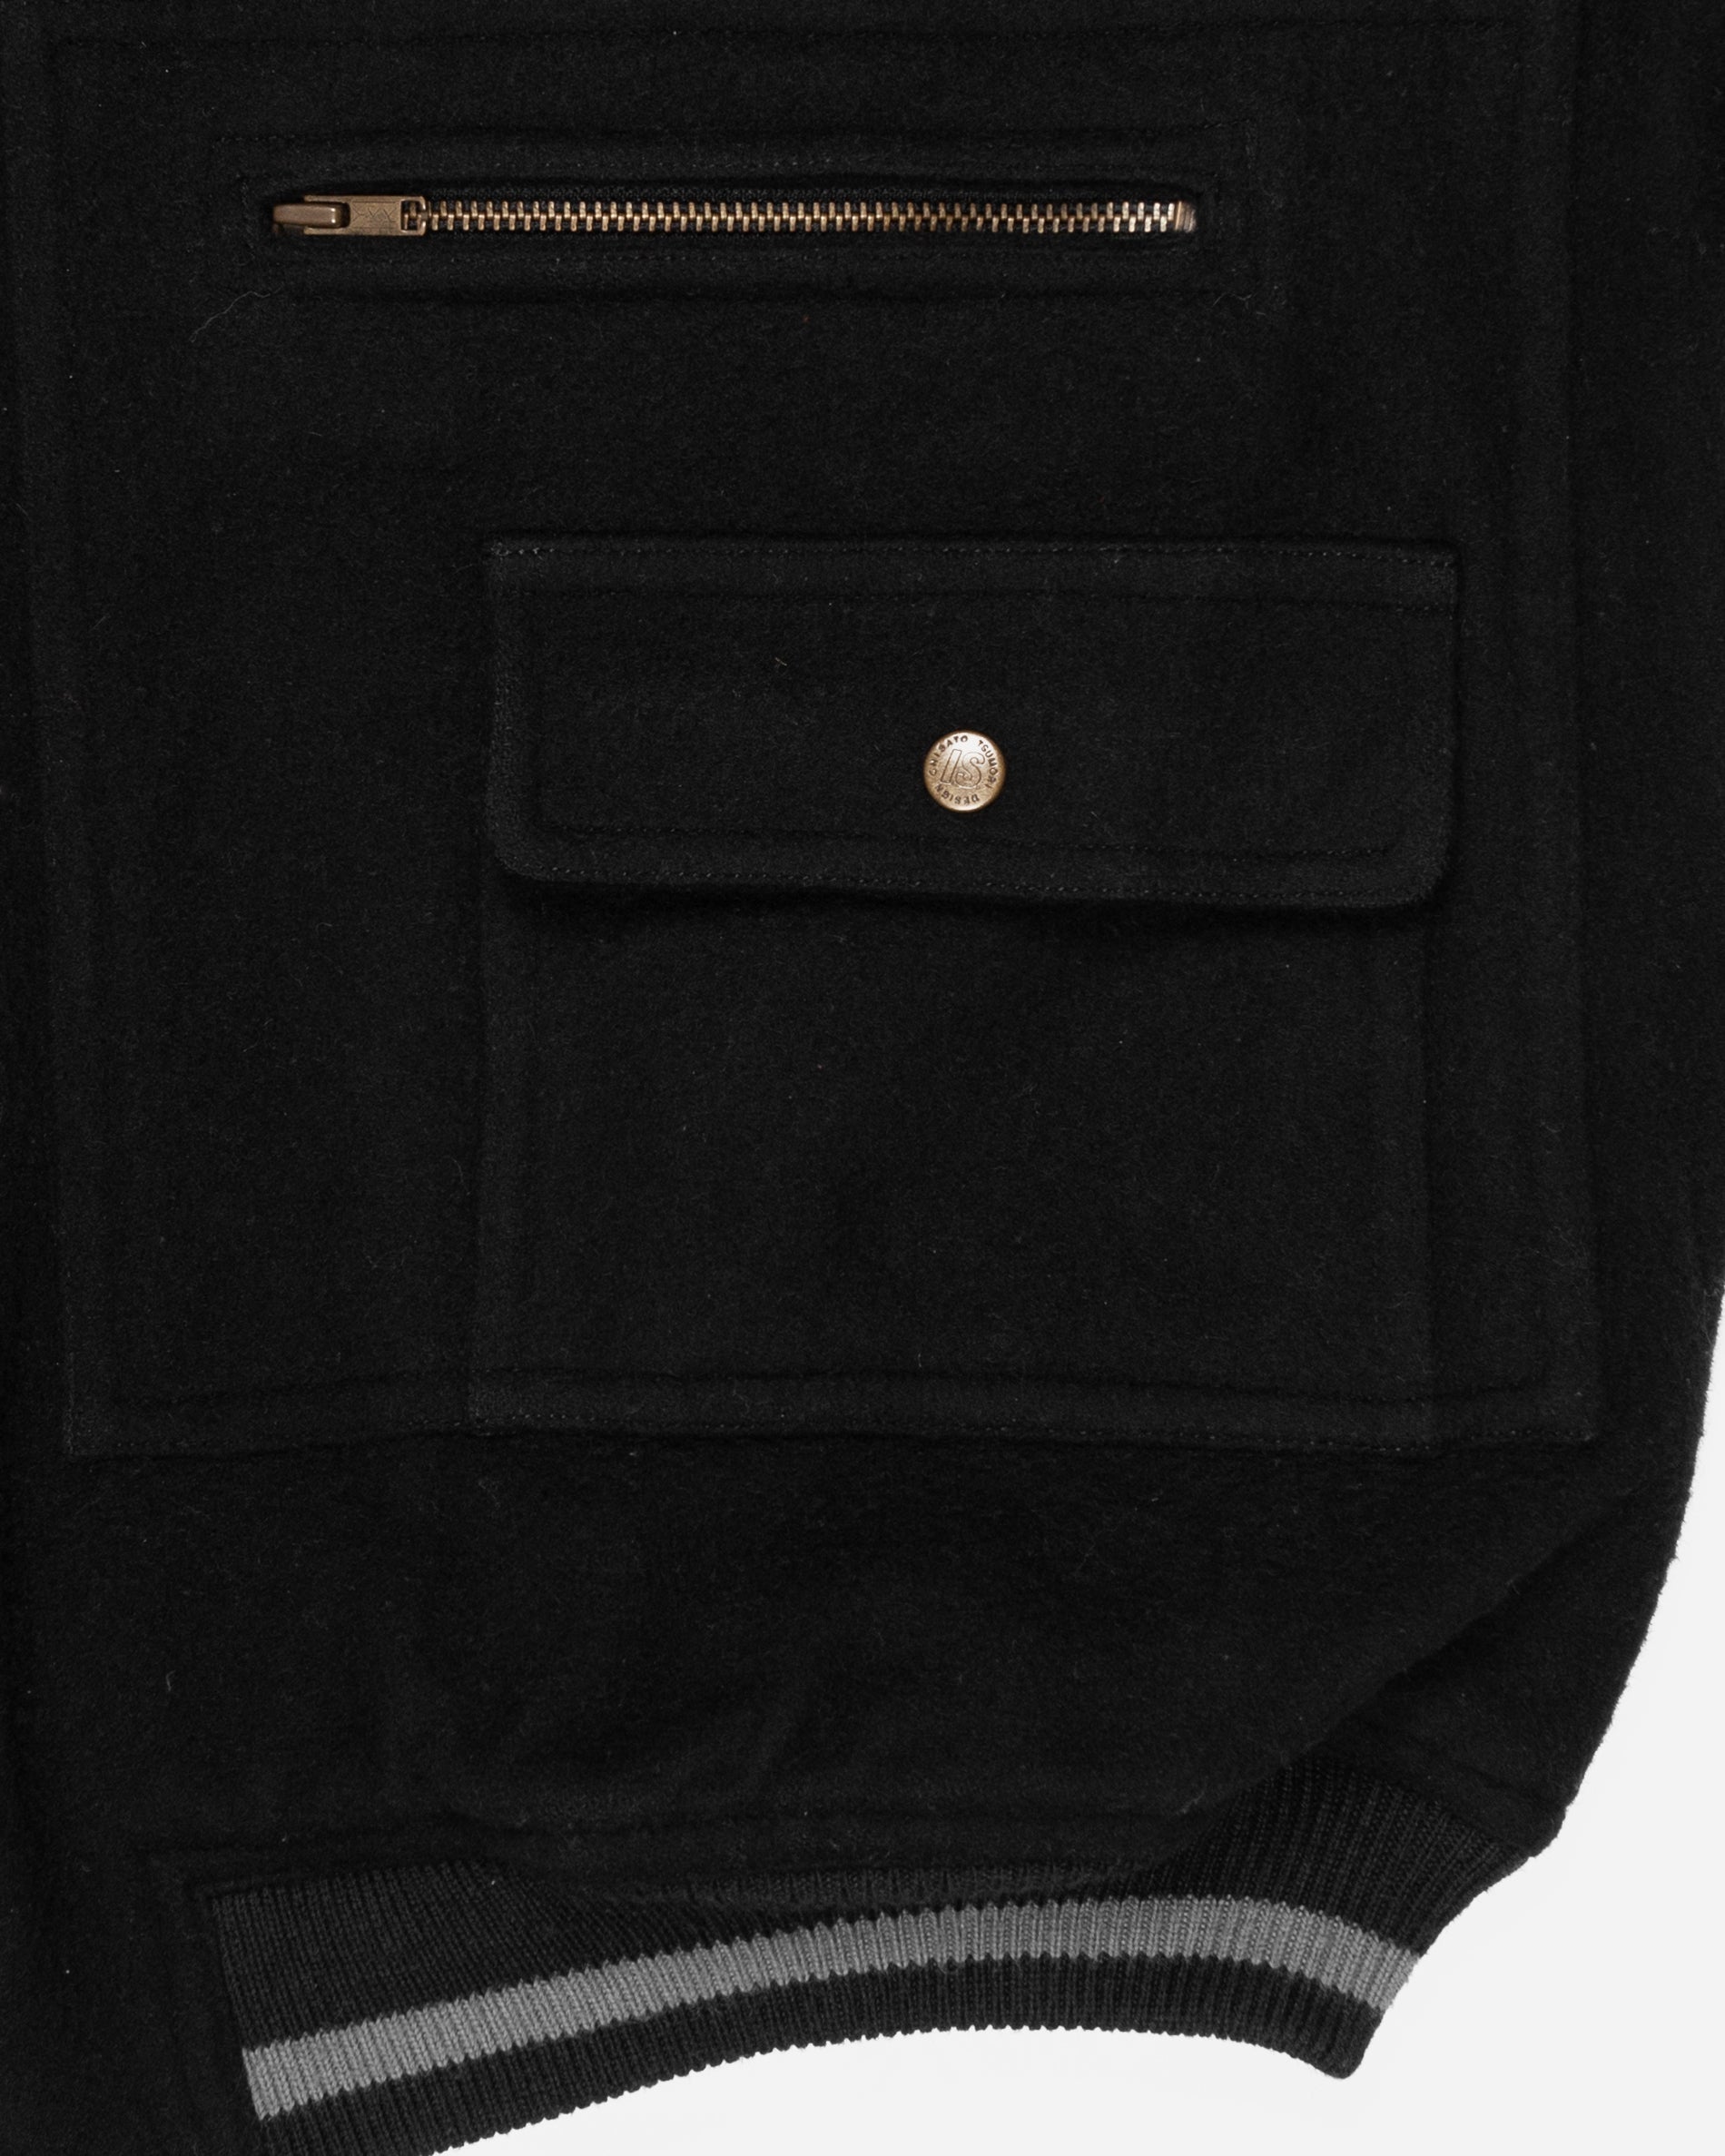 Issey Miyake Sport Black Leather Sleeve Varsity Jacket - 1980s